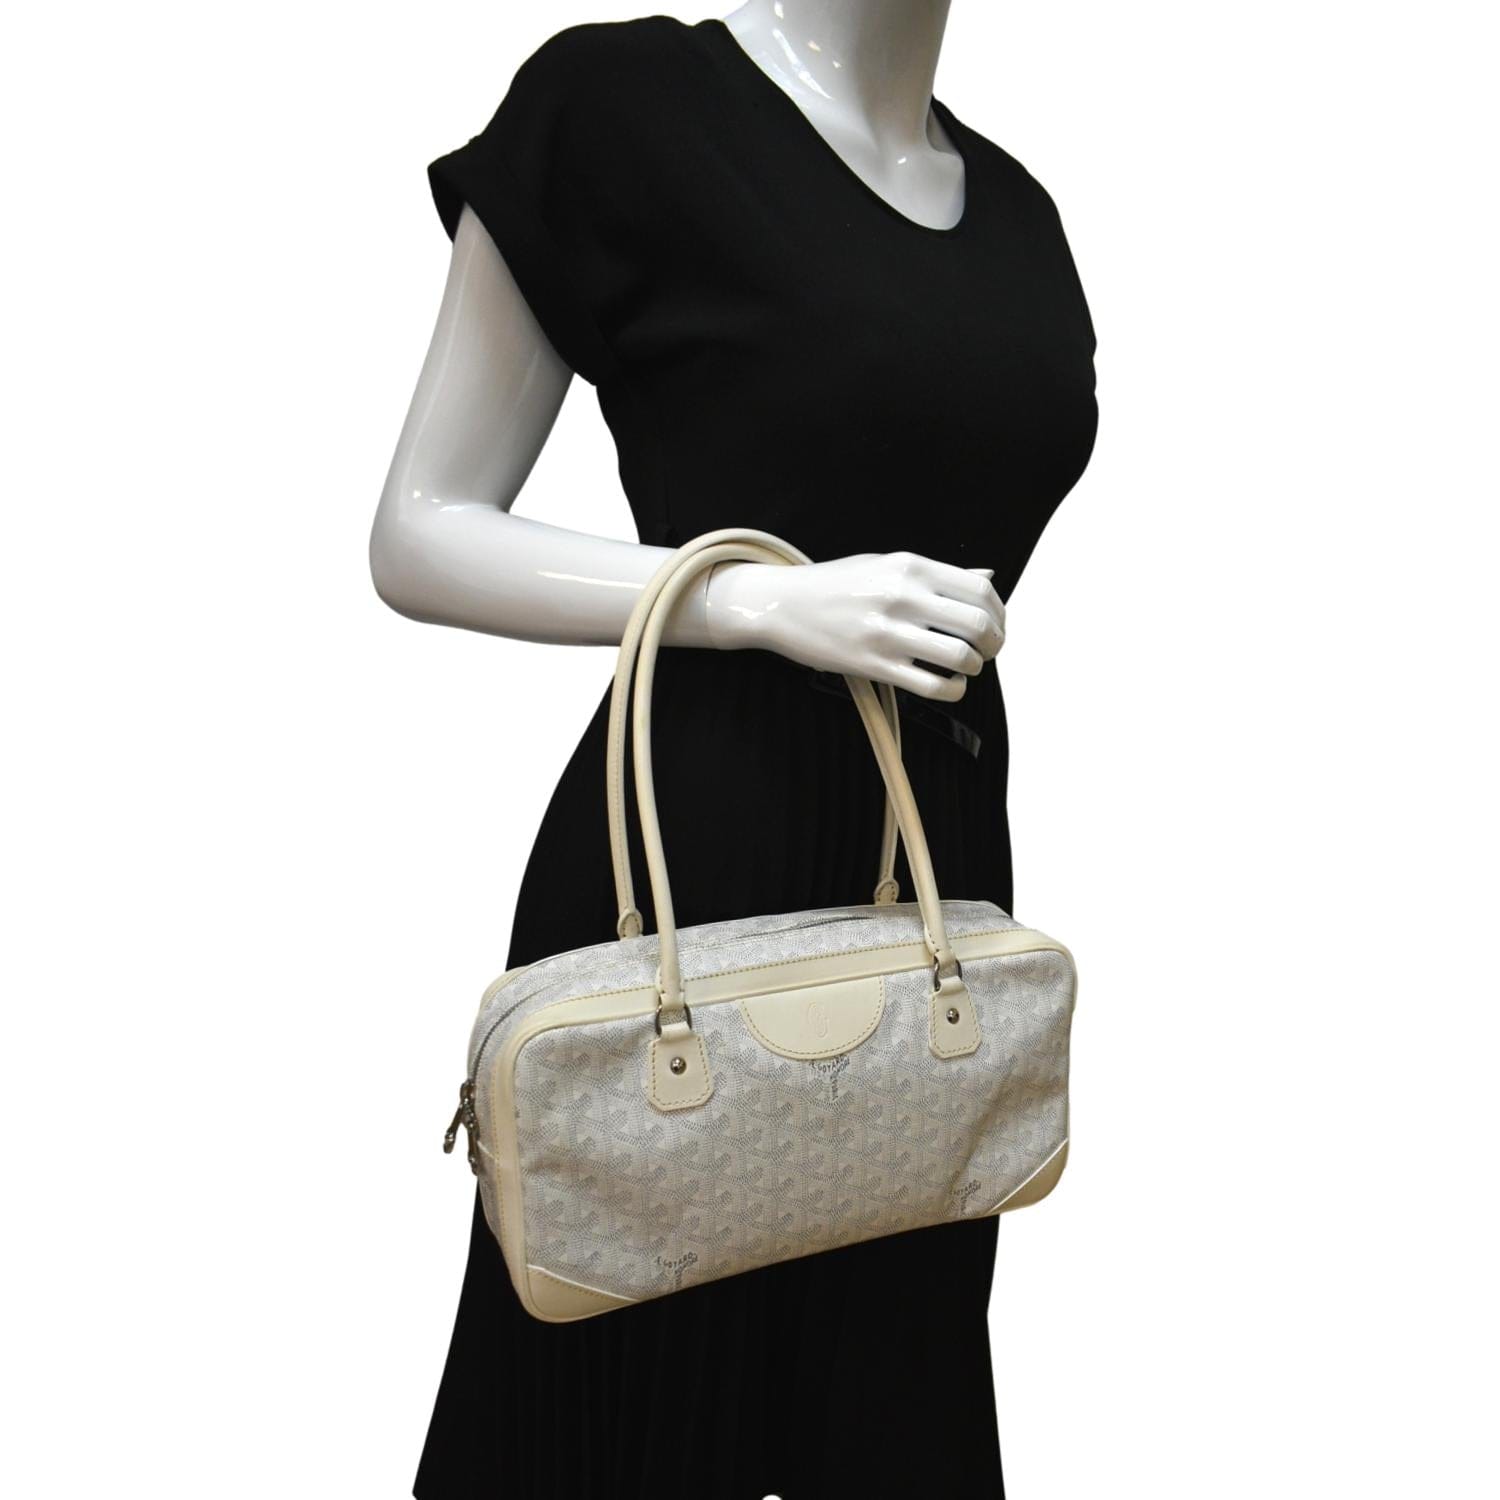 Goyard Womens Shoulder Bags